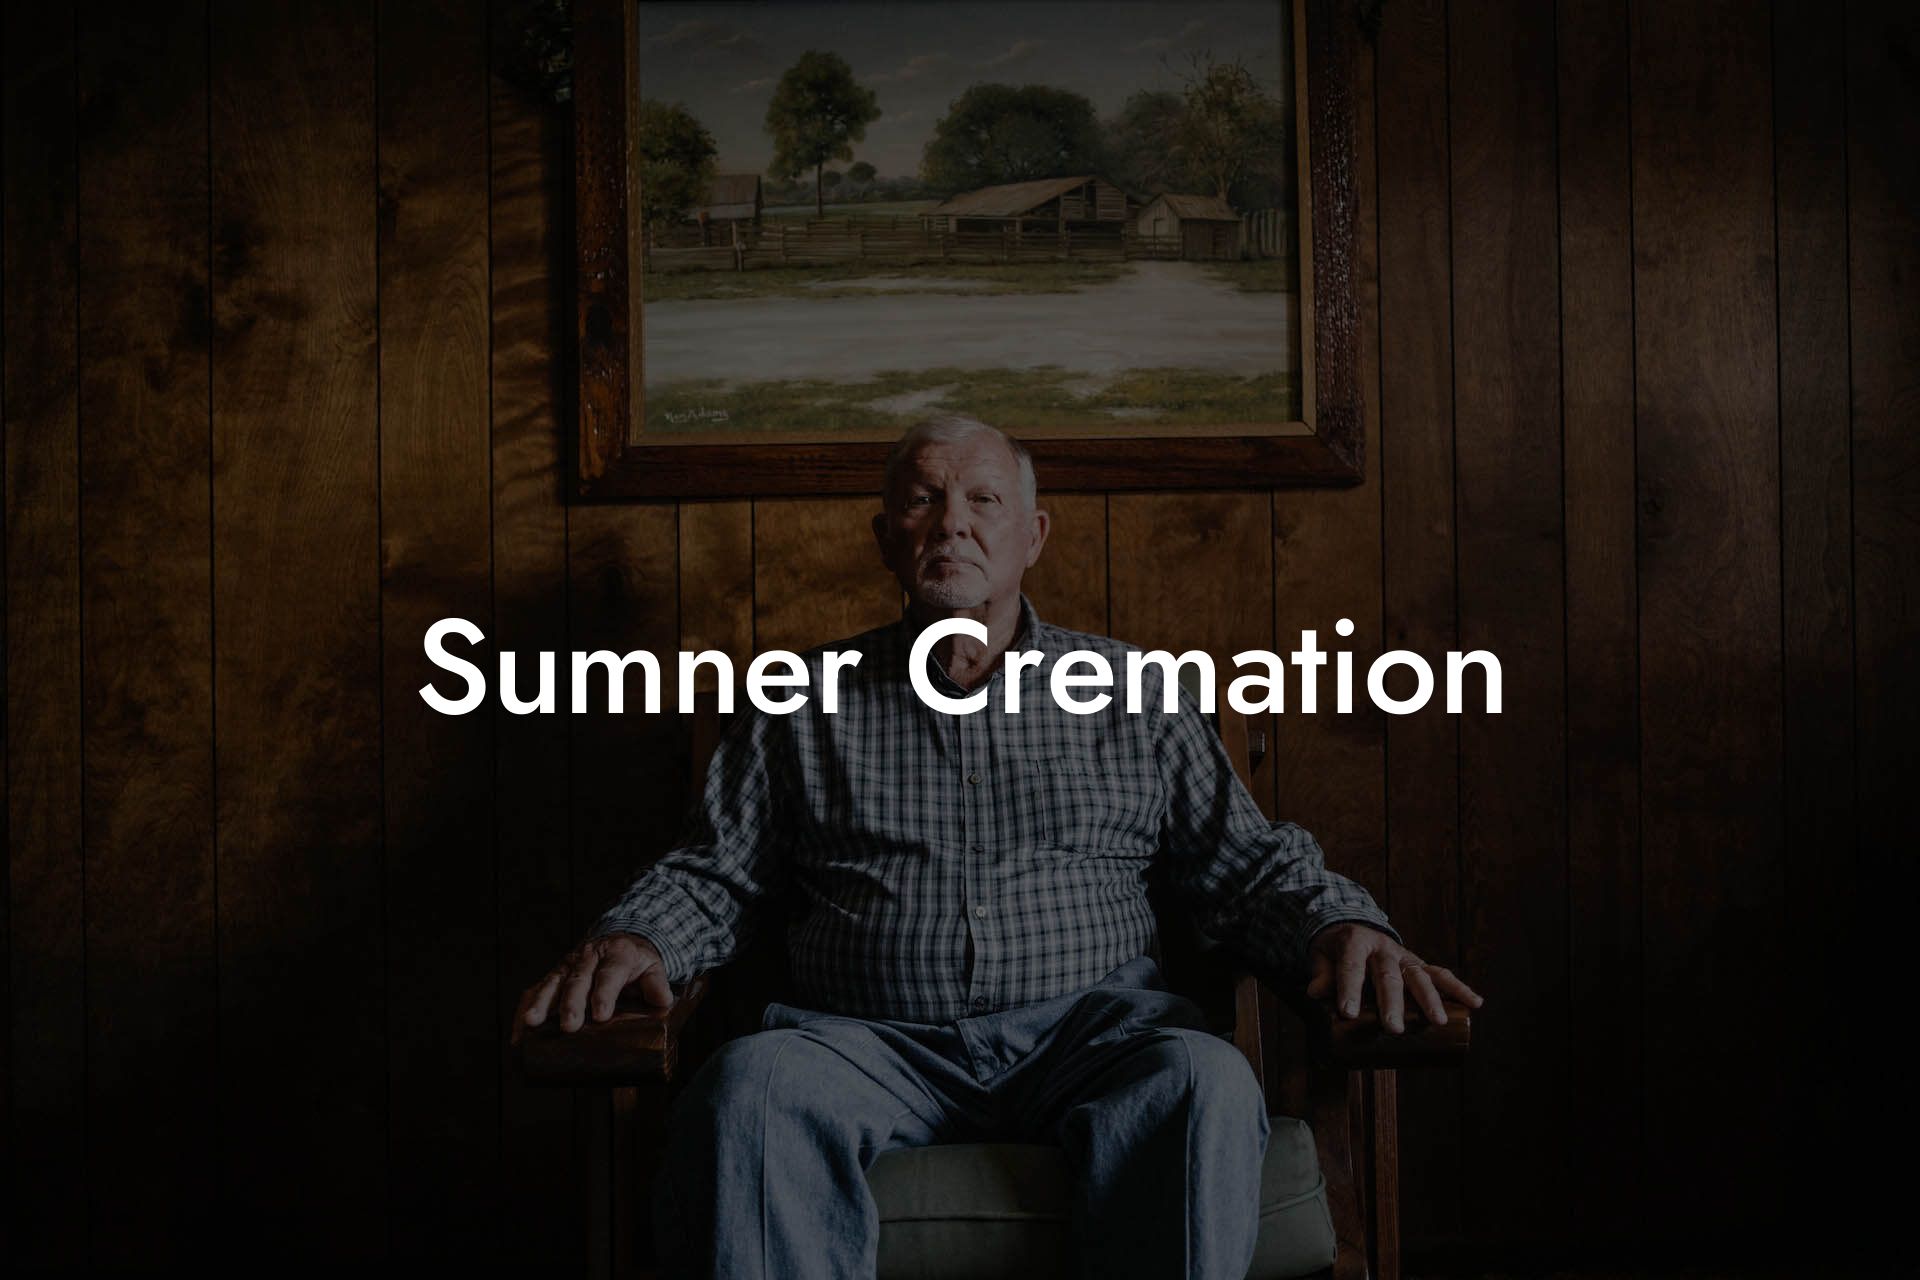 Sumner Cremation